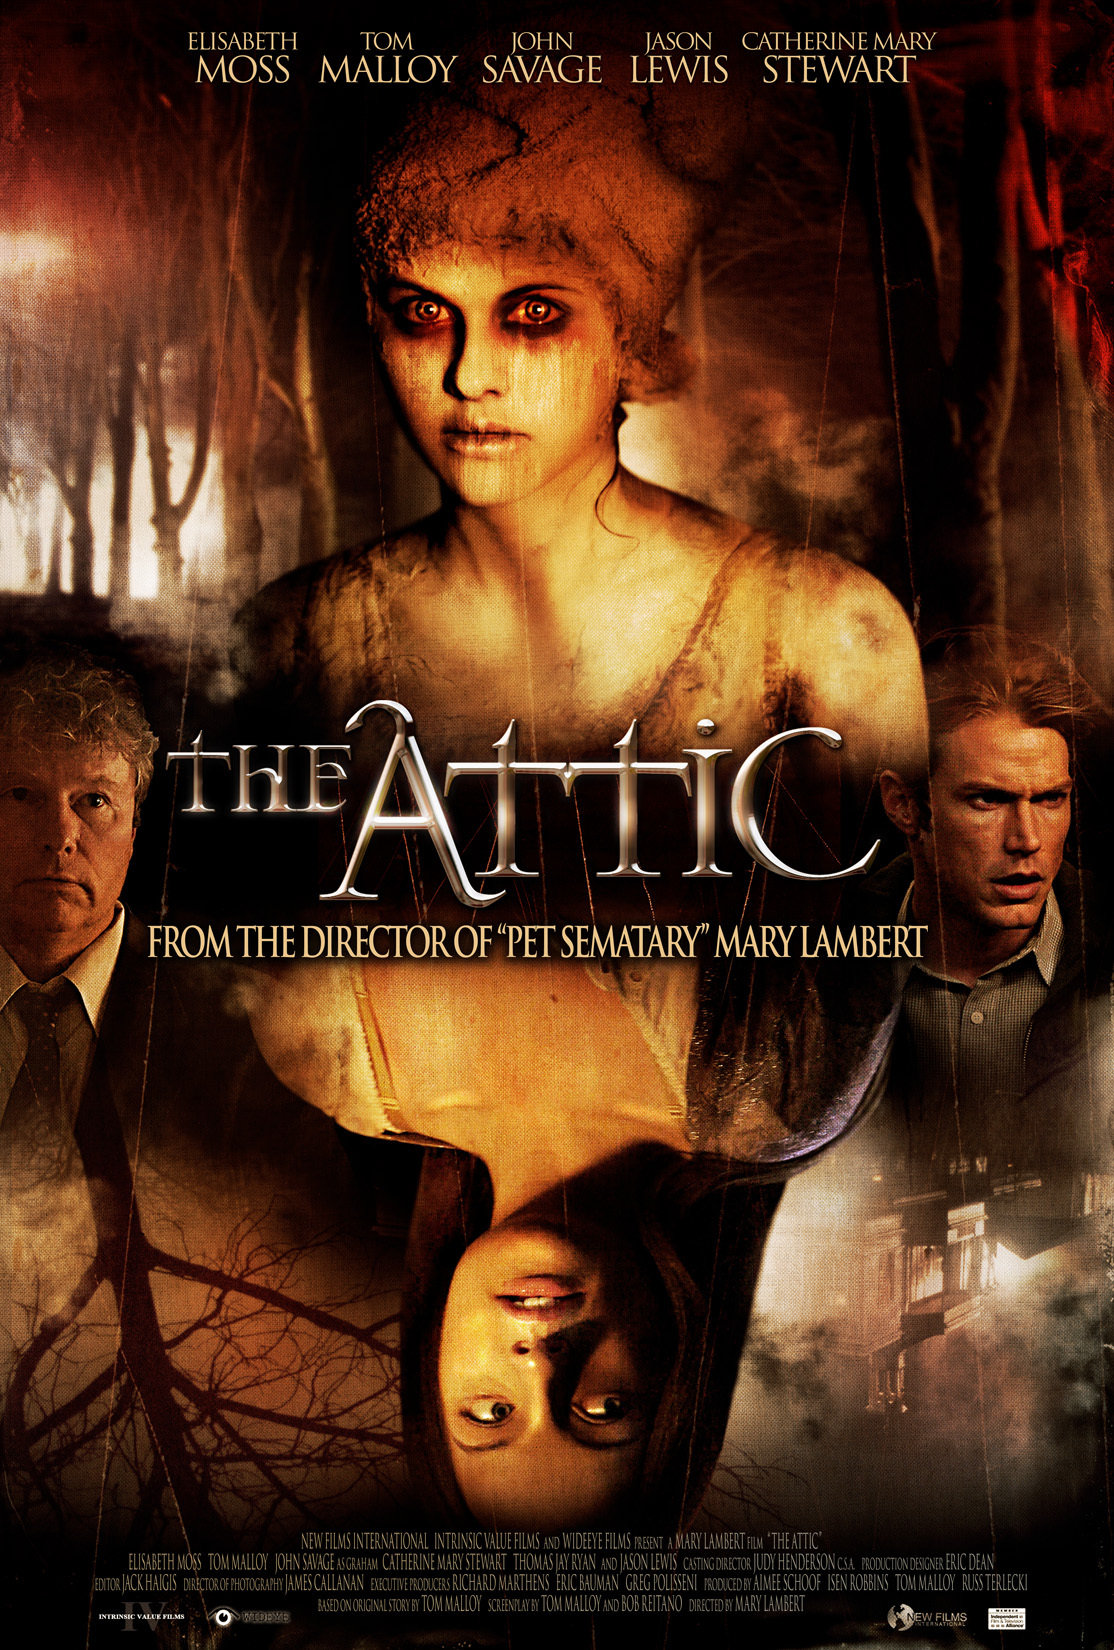 Elisabeth Moss and Alexandra Daddario in The Attic (2007)